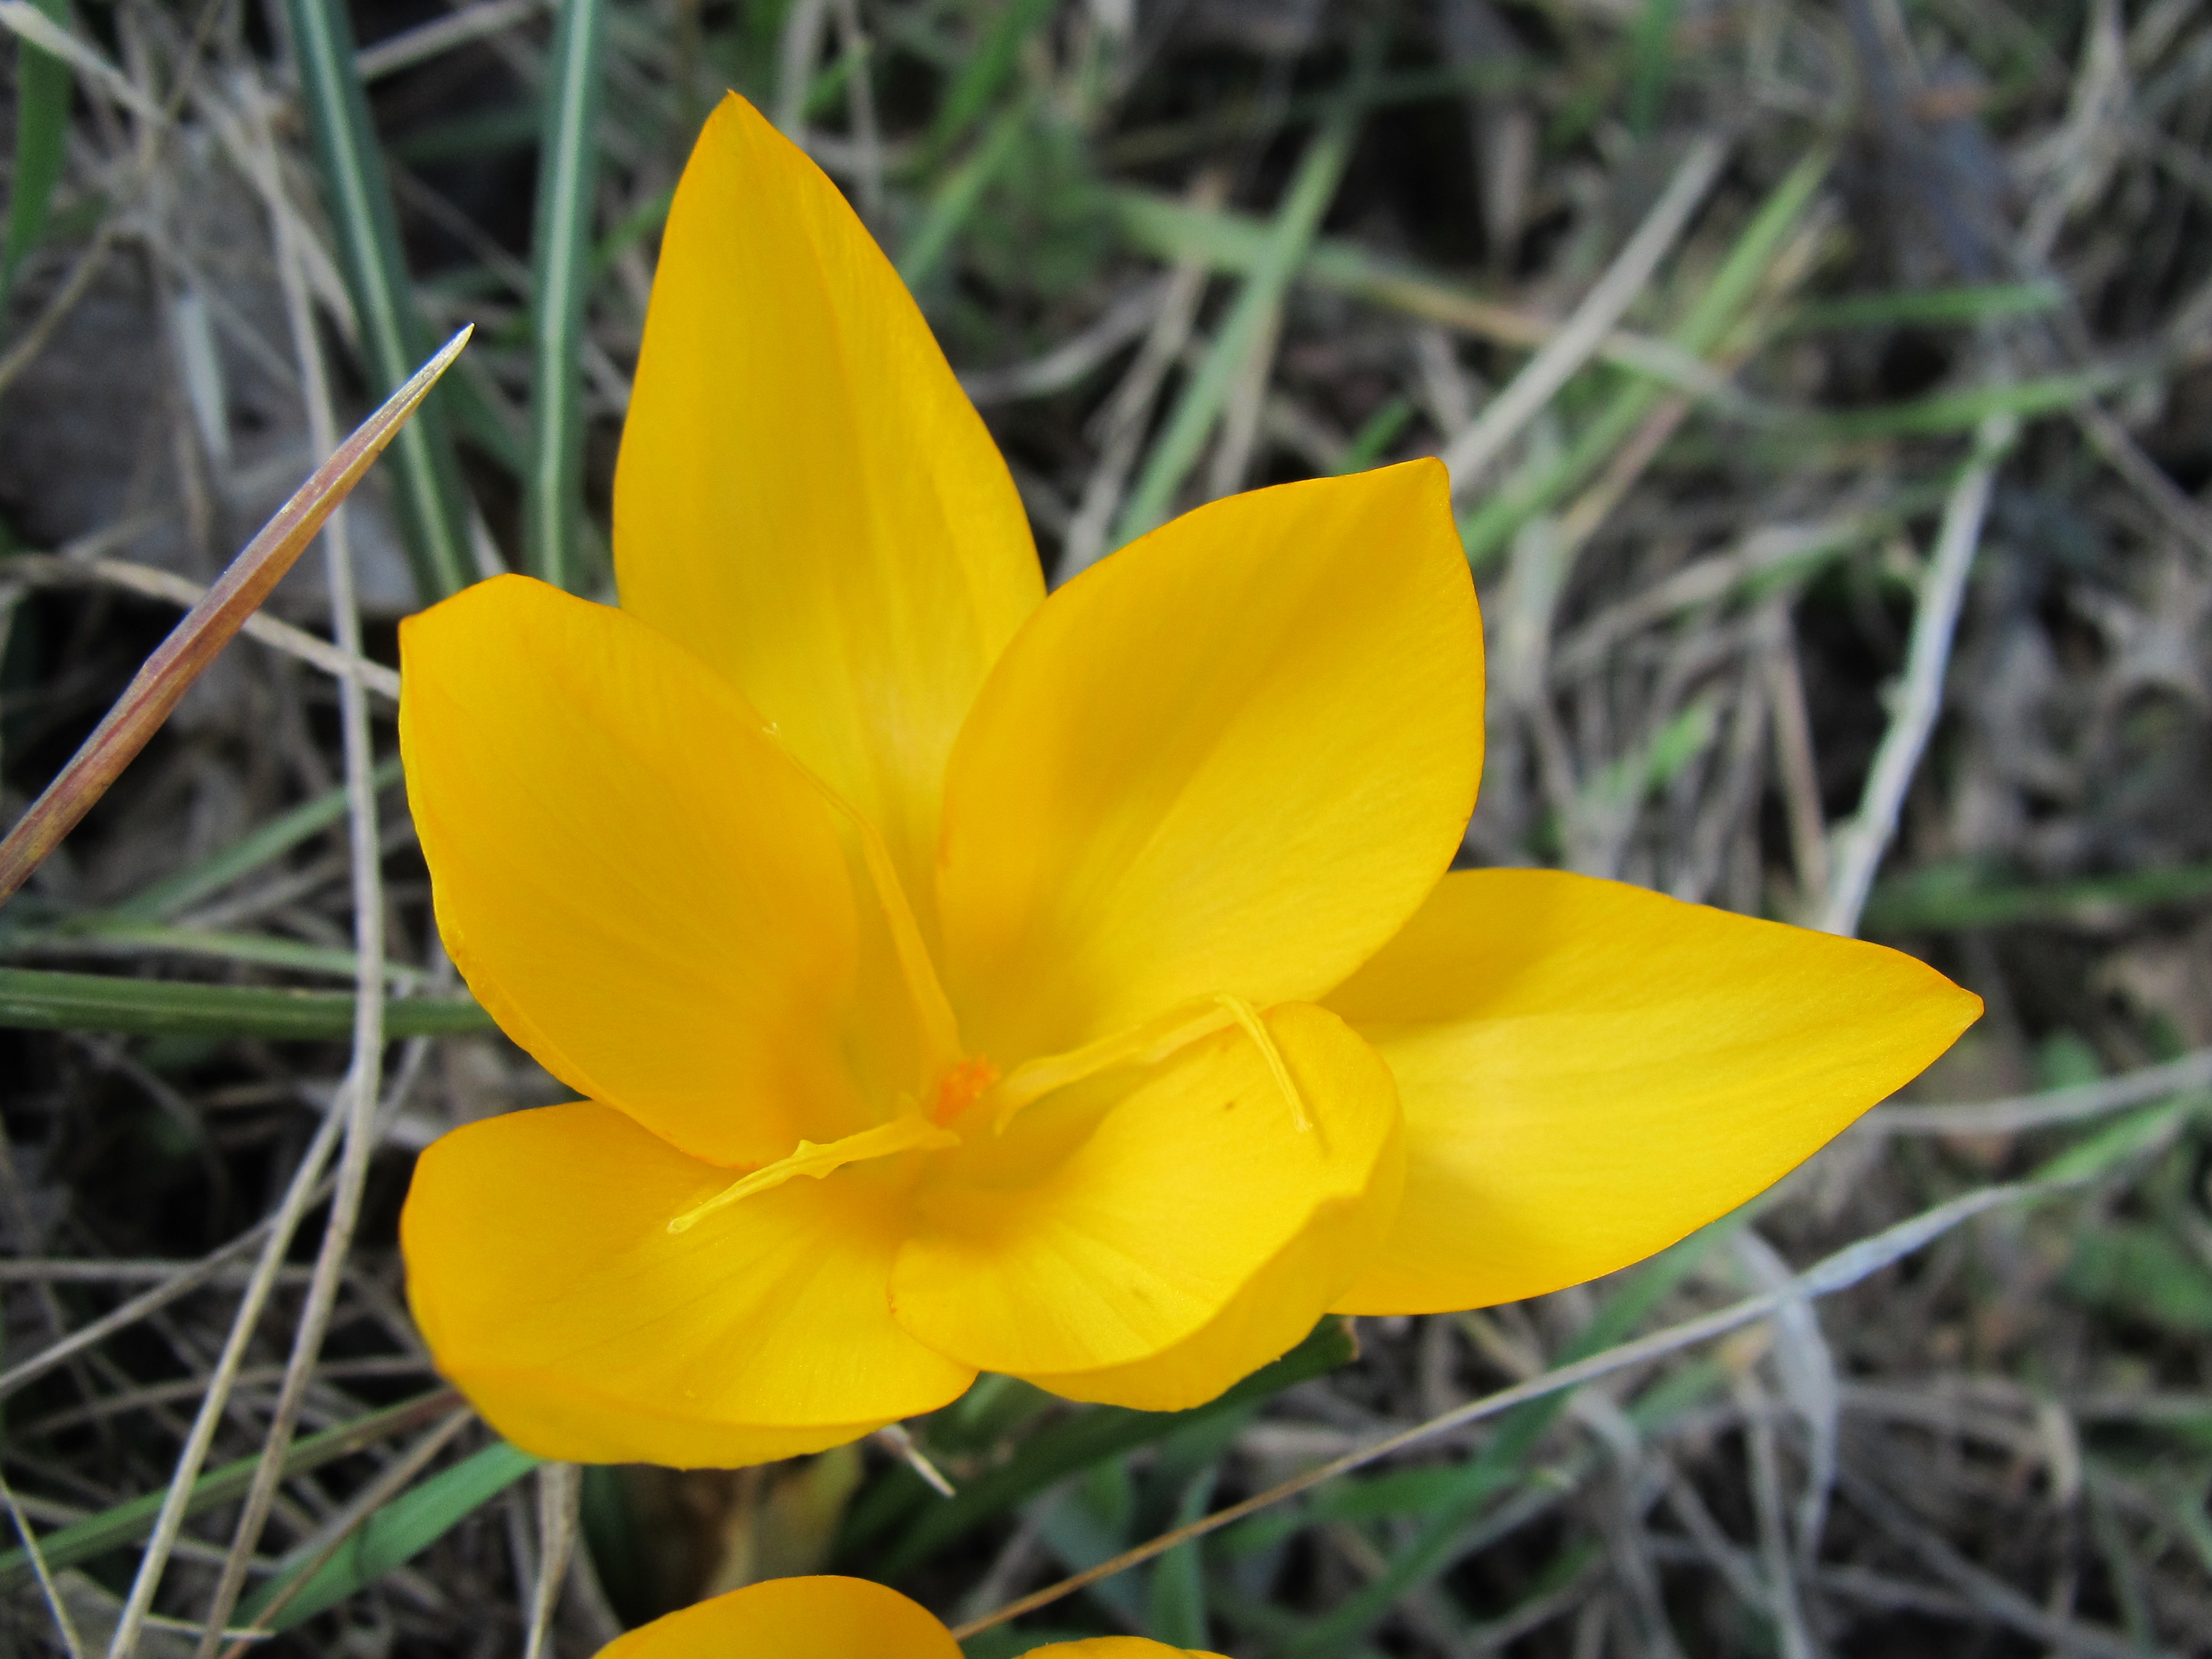 Pretty yellow crocus flower photo